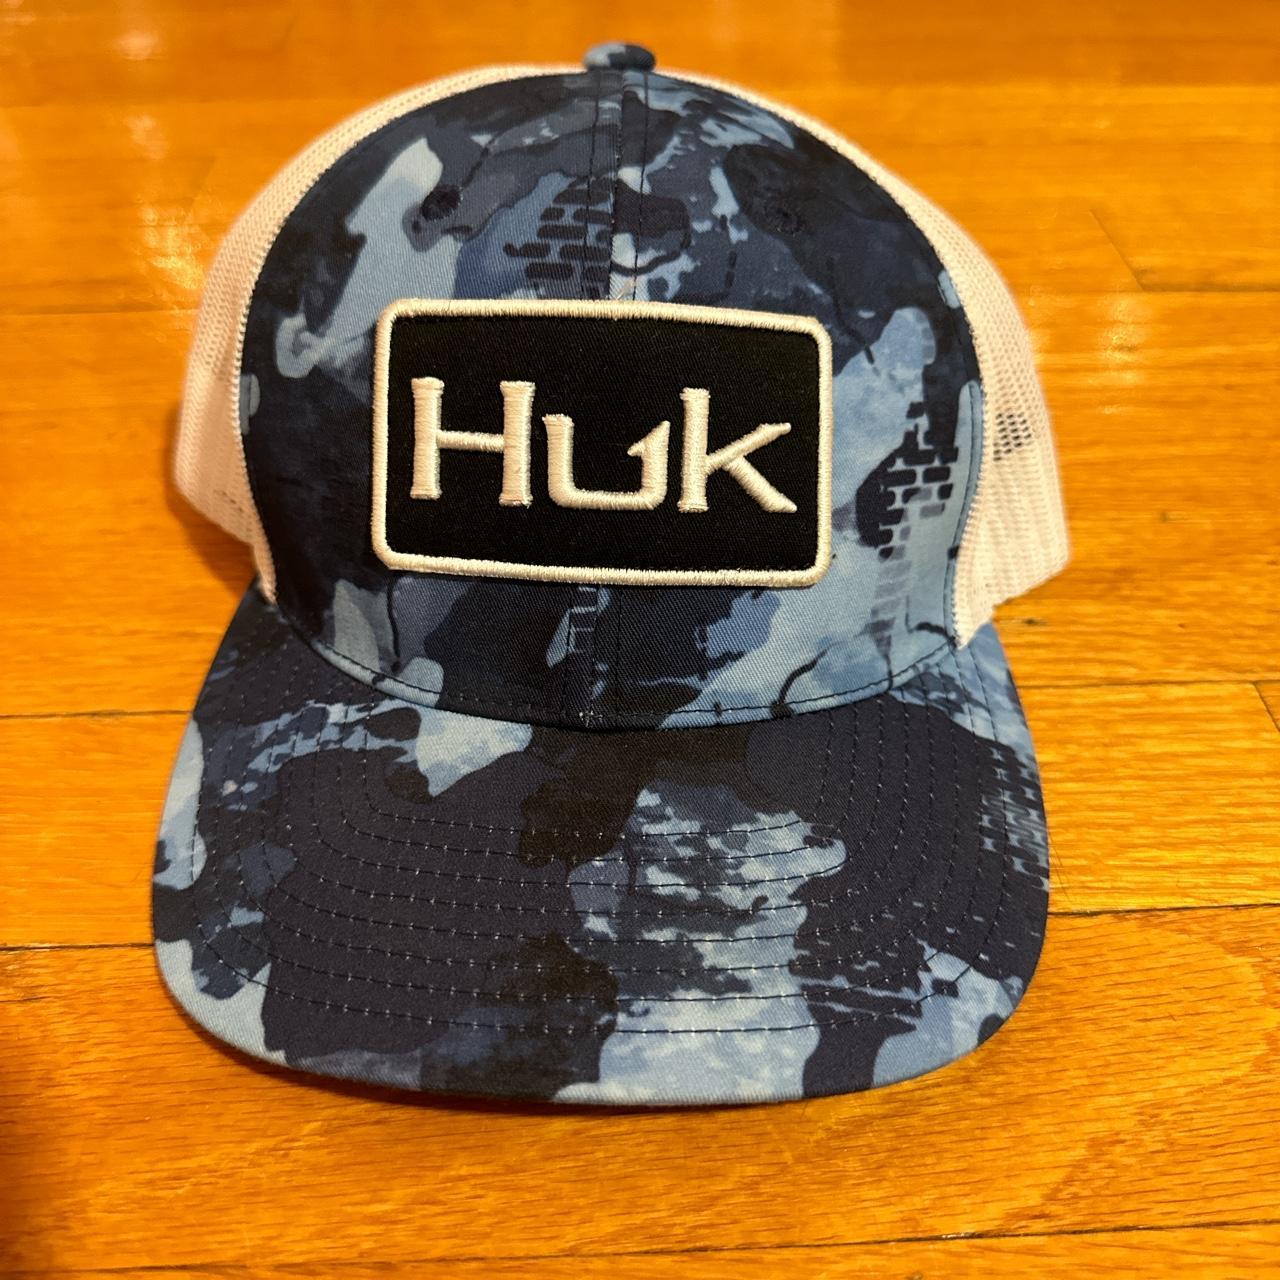 HUK fishing hat SnapBack Minor sweat mark More 🔥 - Depop